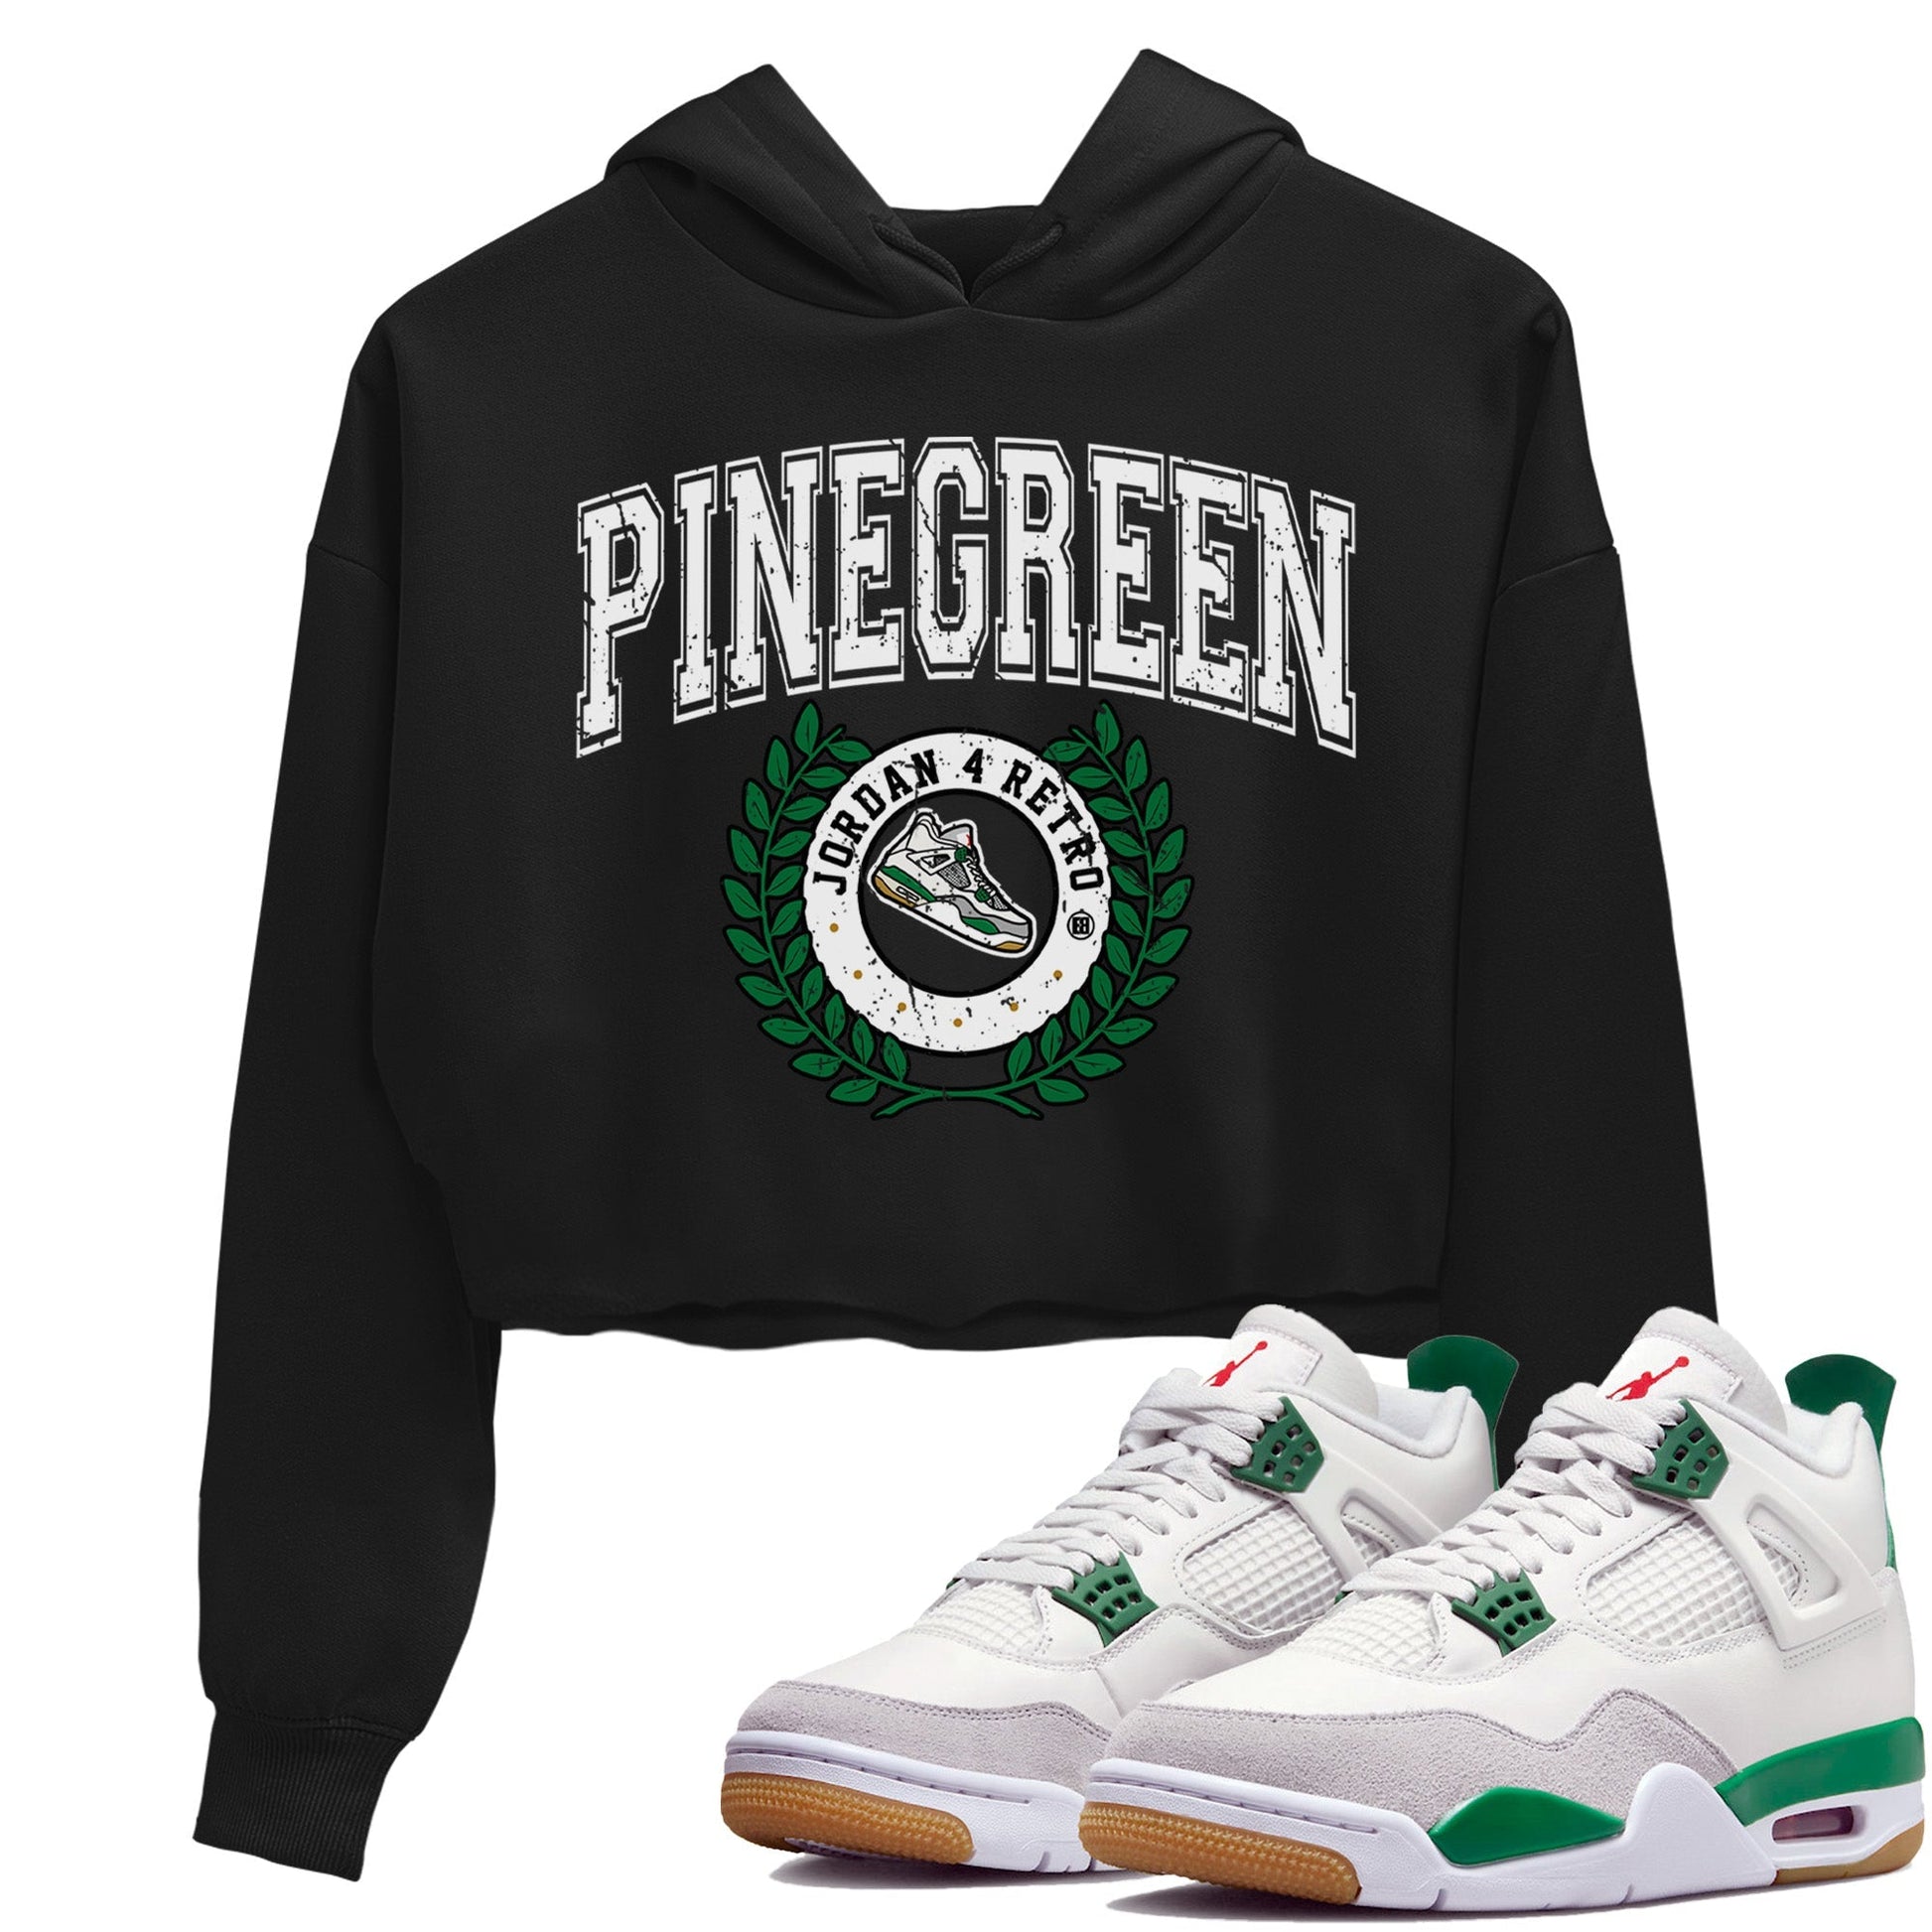 Jordan 4 Pine Green SB Sneaker Match Tees Sneaker Letter Sneaker Tees Nike SB Air Jordan 4 Pine Green Sneaker Tees Sneaker Release Shirts Women's Shirts Black 1